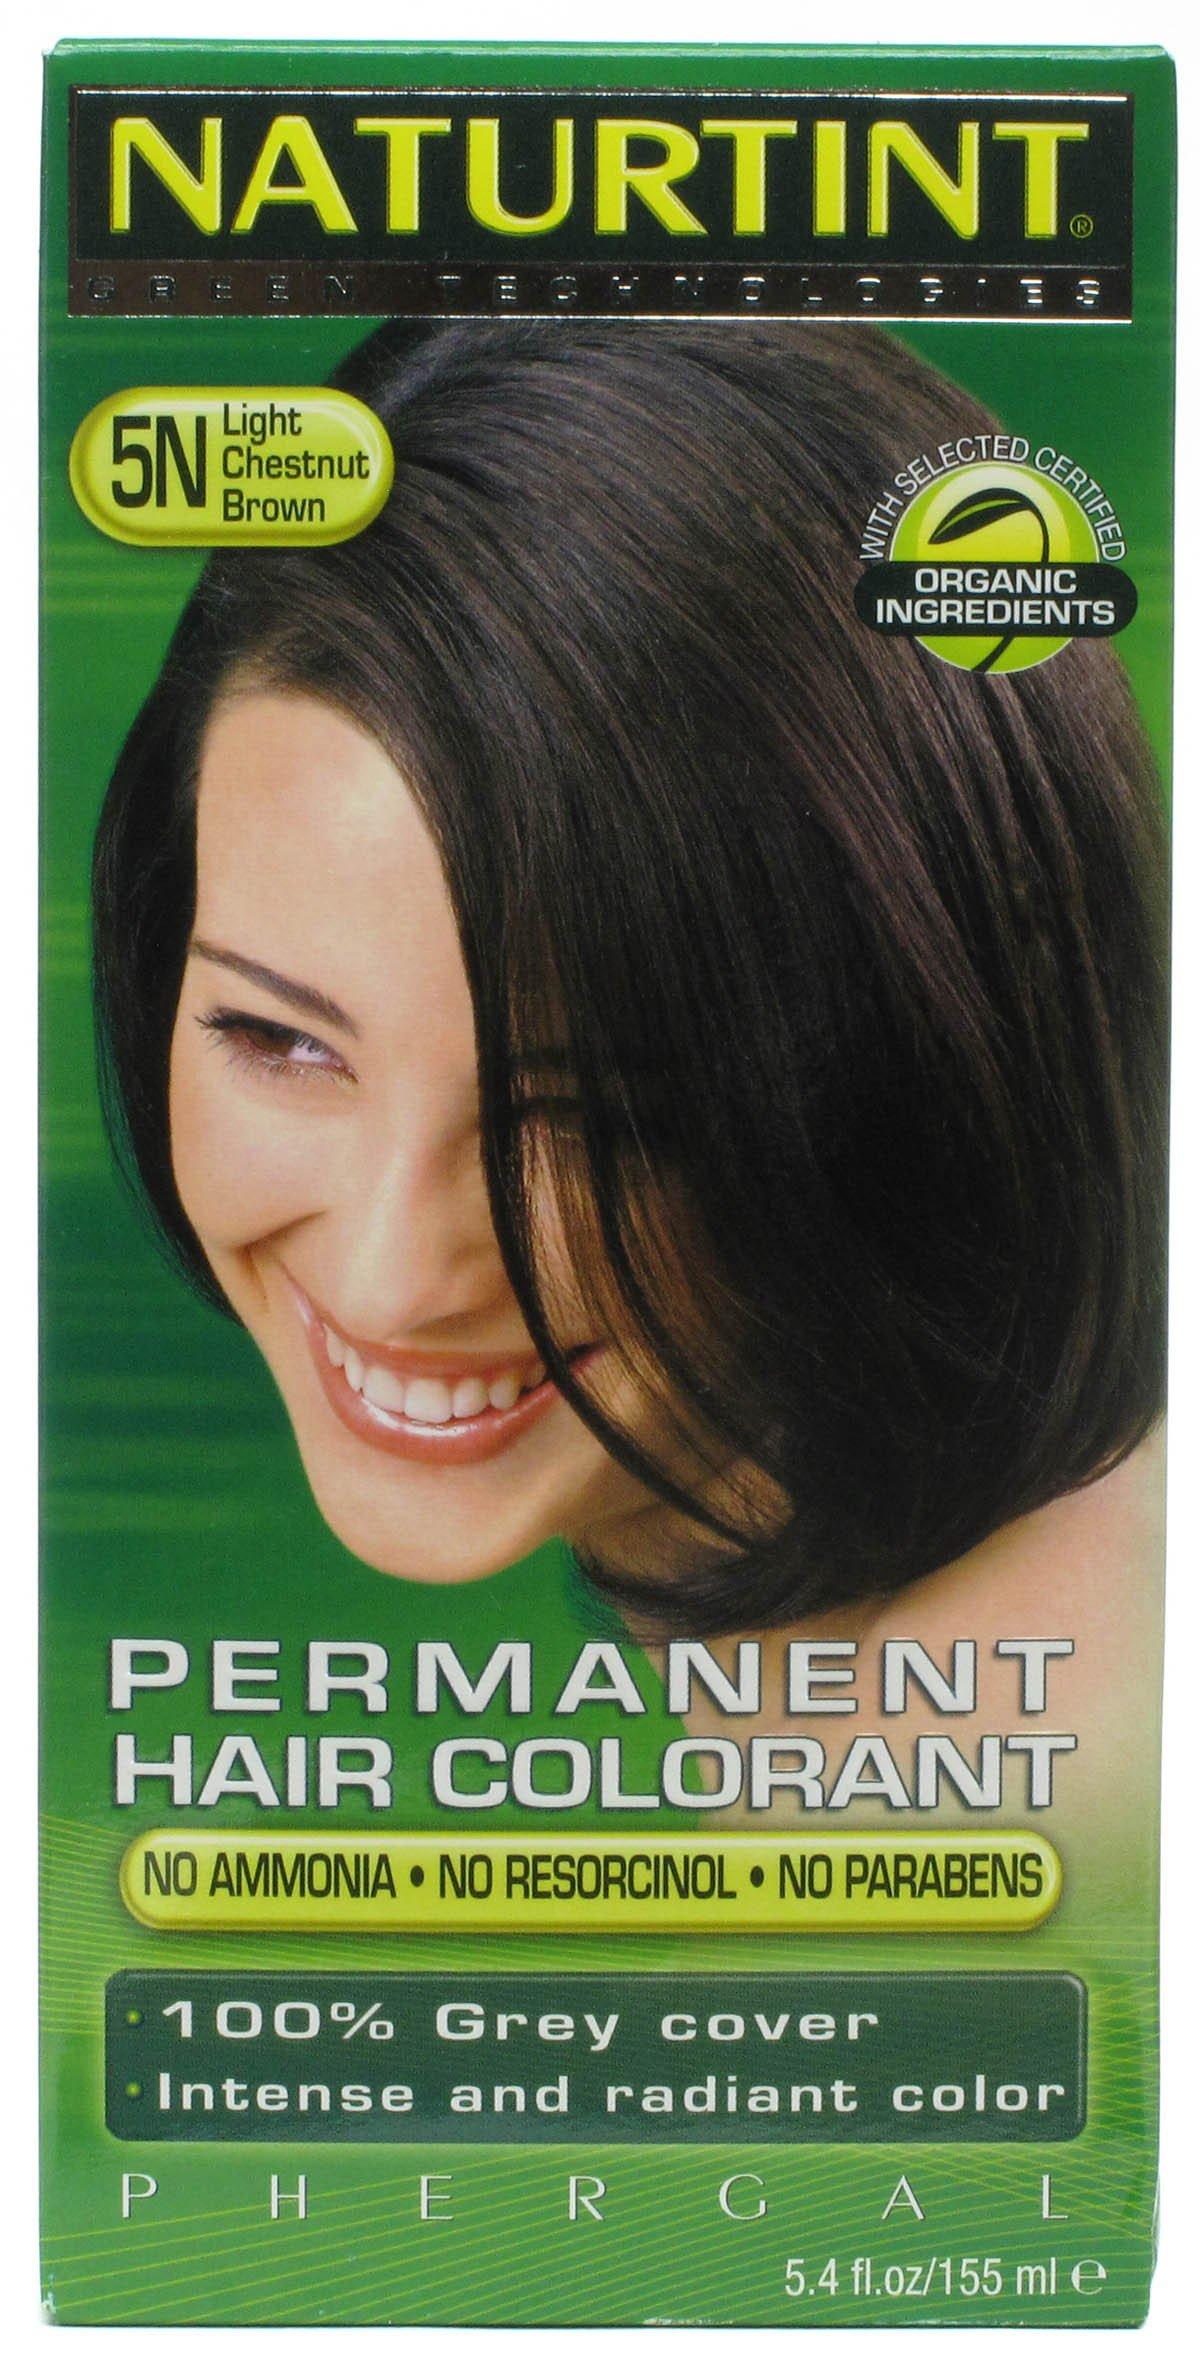  - Naturtint Permanent Hair Color 5N Light Chestnut Brown   fl oz (150 ml)